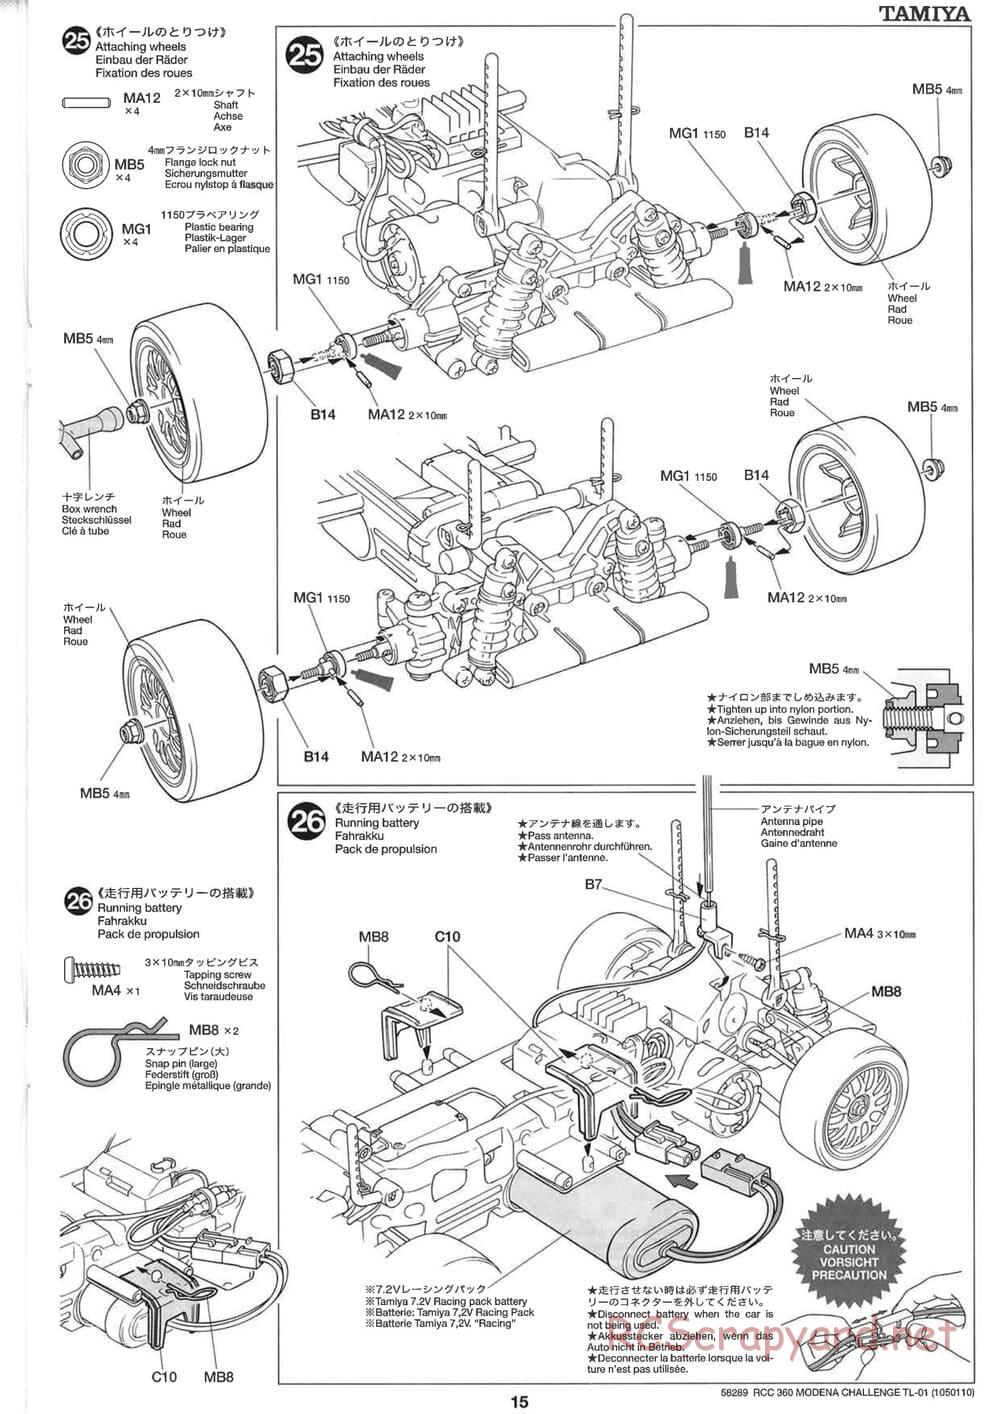 Tamiya - Ferrari 360 Modena Challenge - TL-01 Chassis - Manual - Page 15